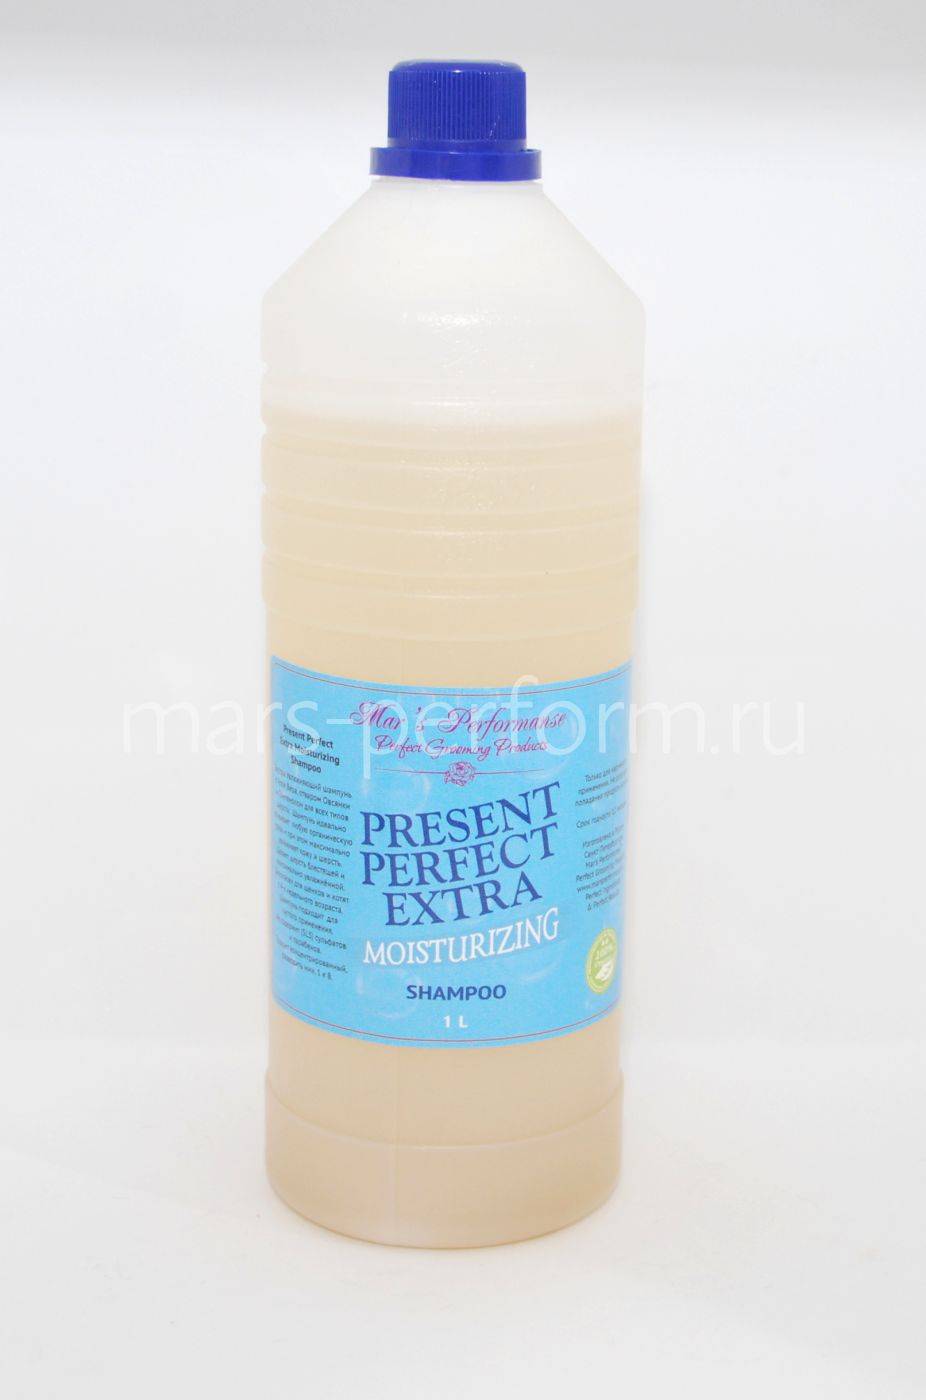 Present Perfect Extra Moisturizing Shampoo 1 л